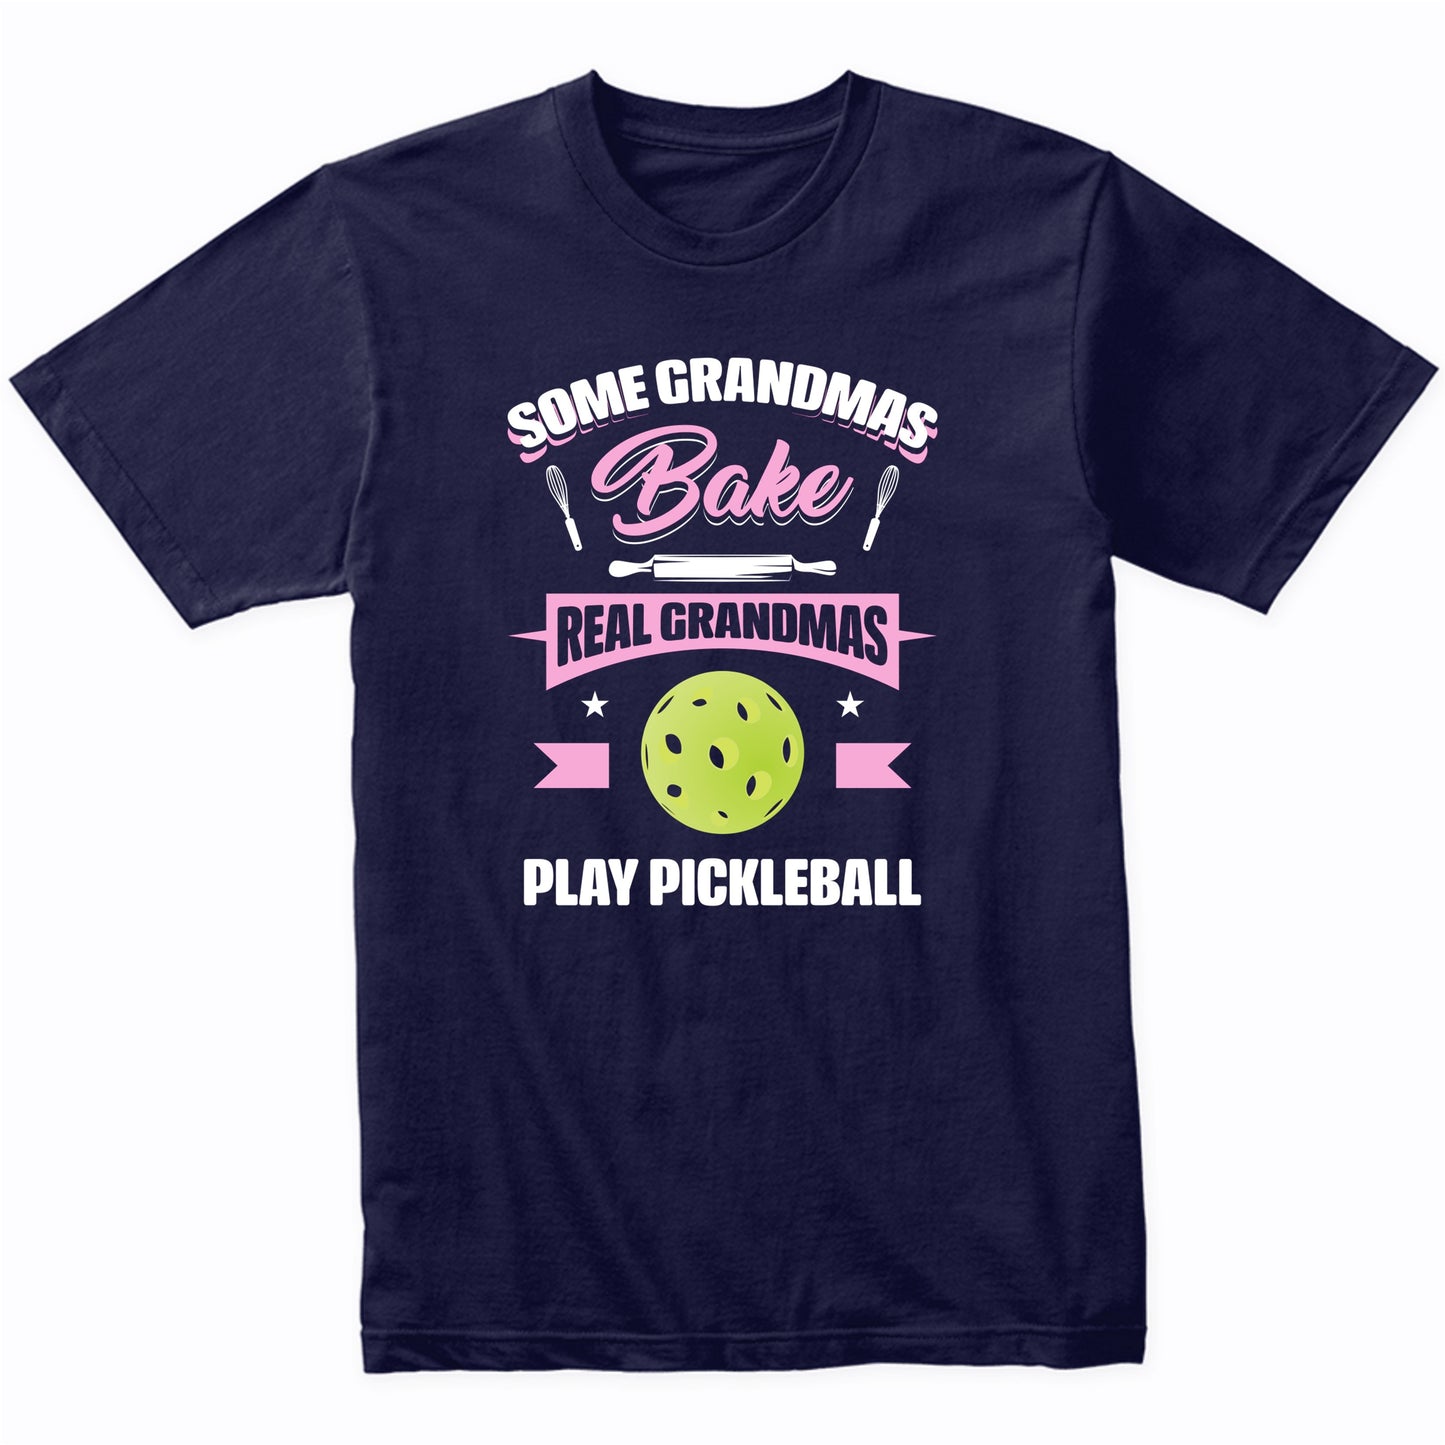 Some Grandmas Bake Real Grandmas Play Pickleball Funny Pickleball Grandma T-Shirt